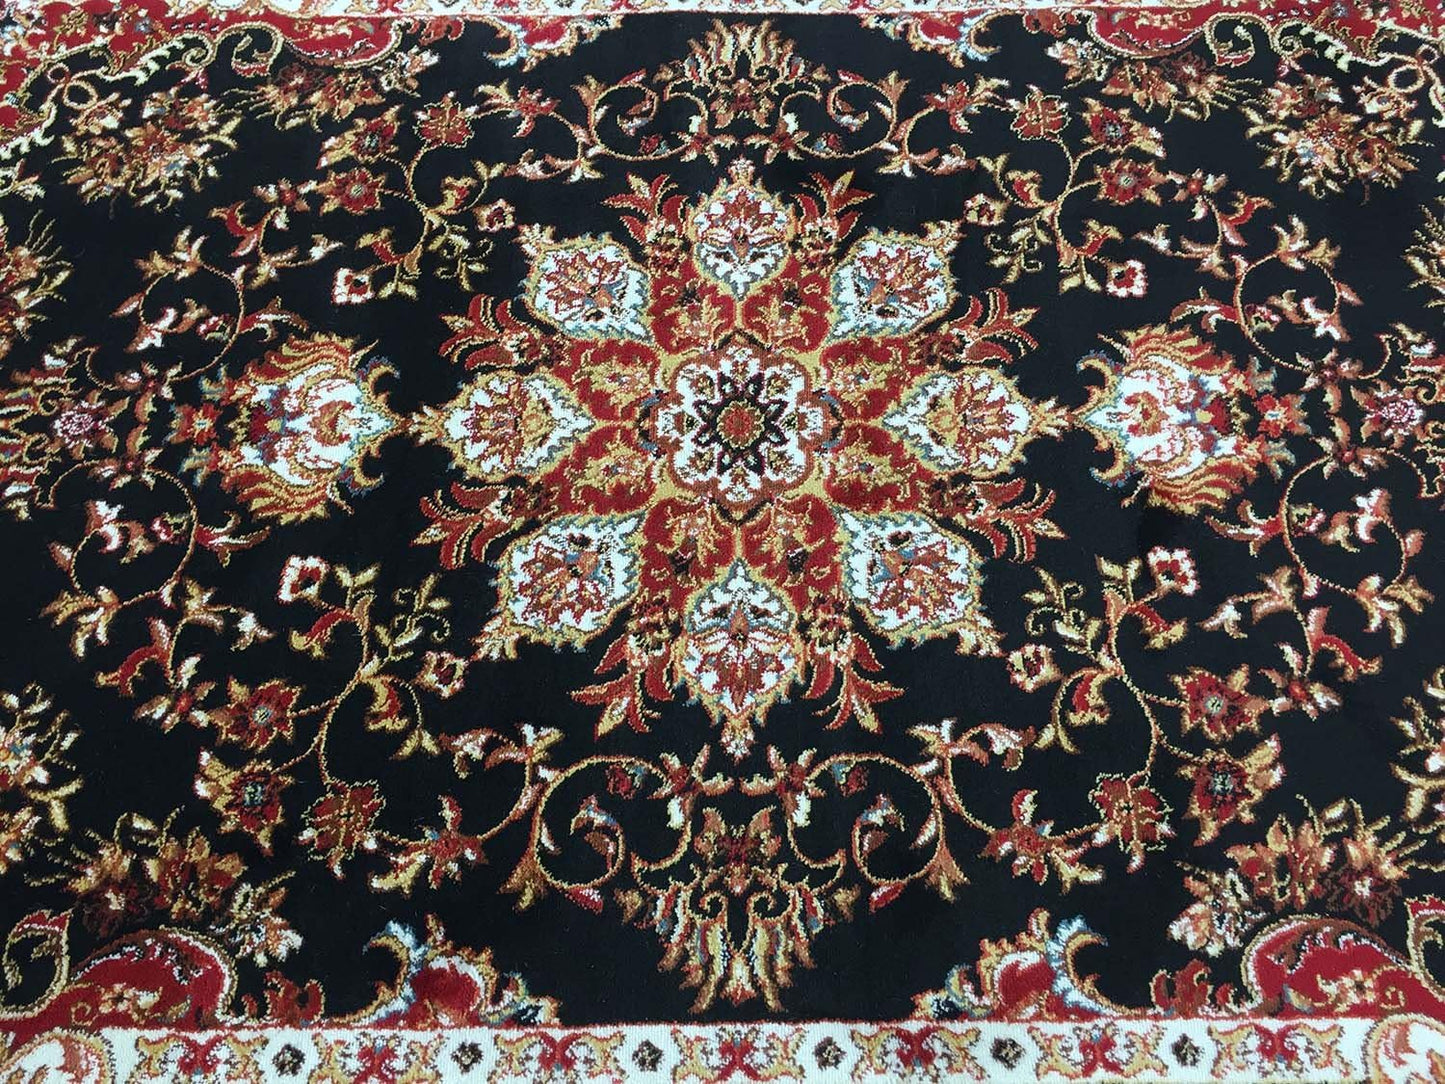 Nevita Collection Isfahan Persian Traditional Design Area Rug  (Black, 5' 3" x 7' 1")